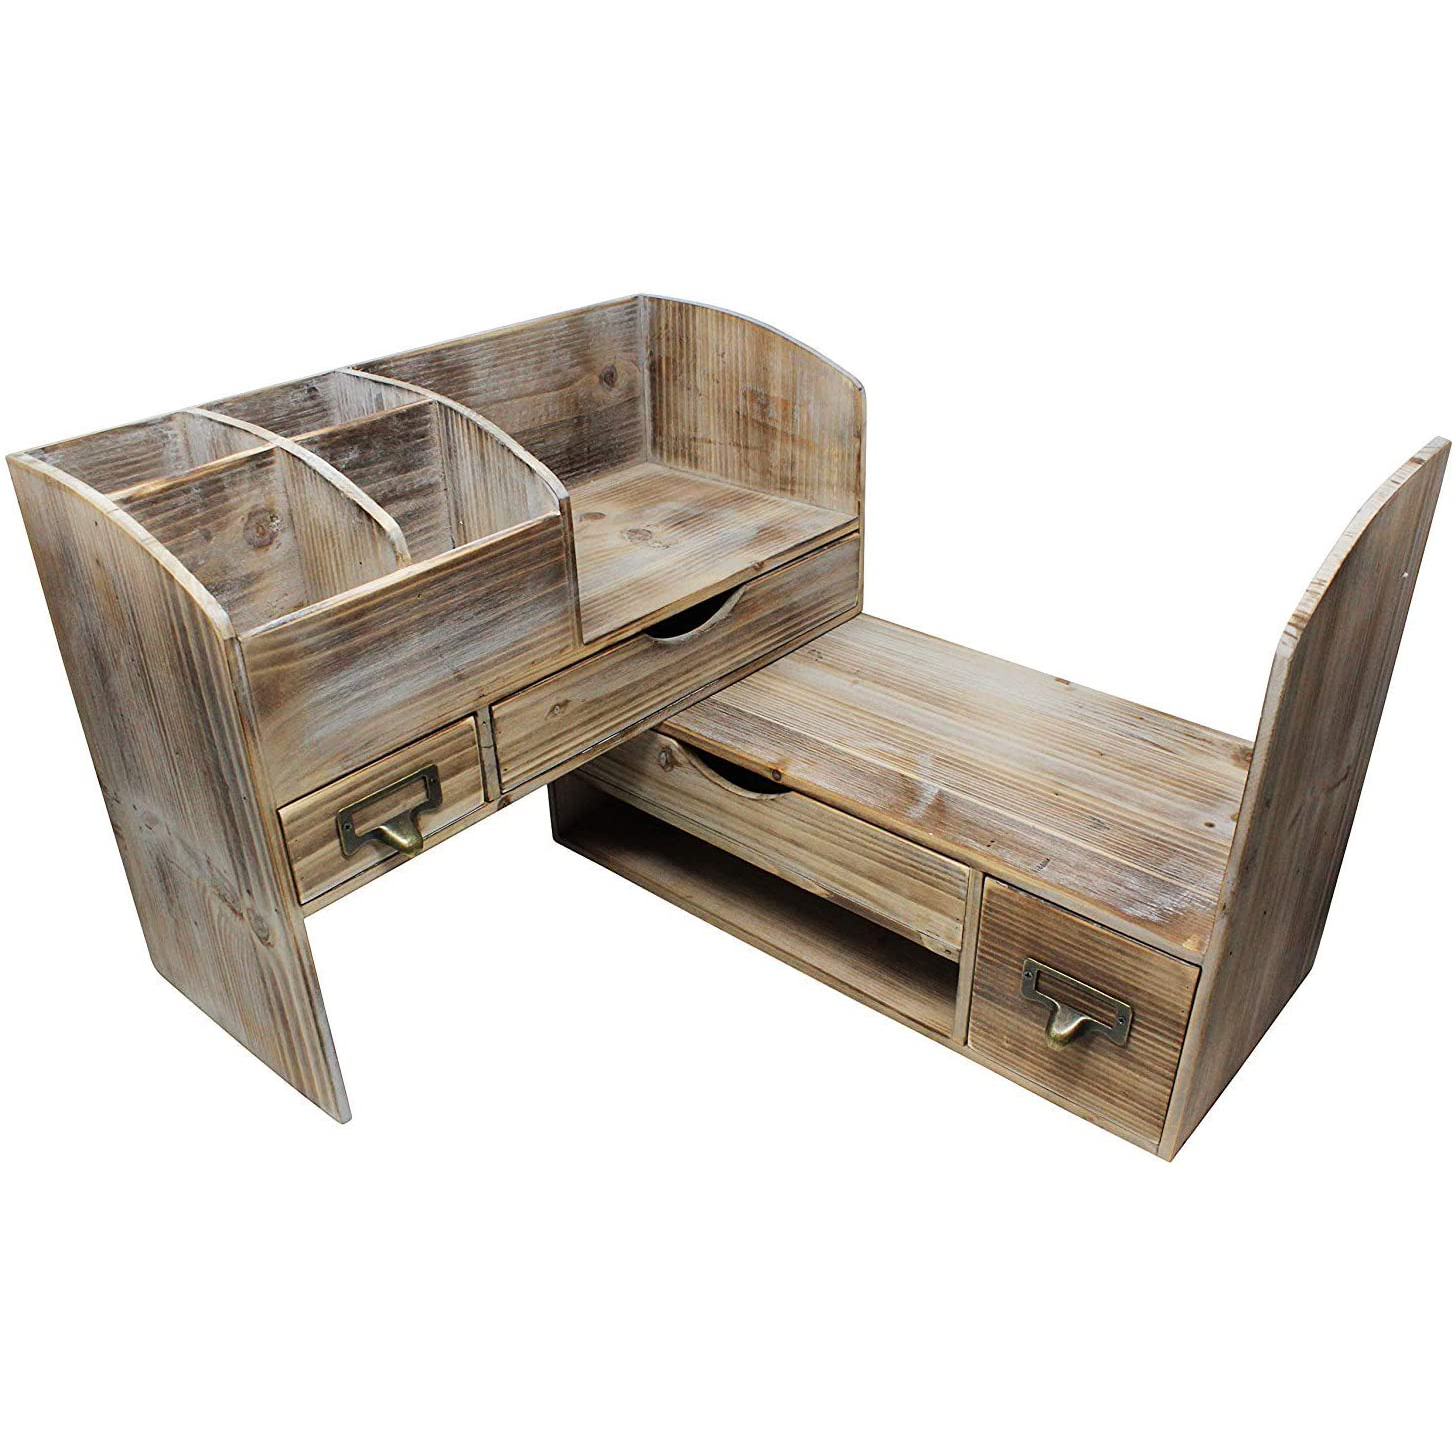 Adjustable Wooden Office Desk Organizer For Desktop, Tabletop, or Counter – Wood Storage Shelf Rack – For Office Supplies, Desk Accessories, or Mail - Barnwood